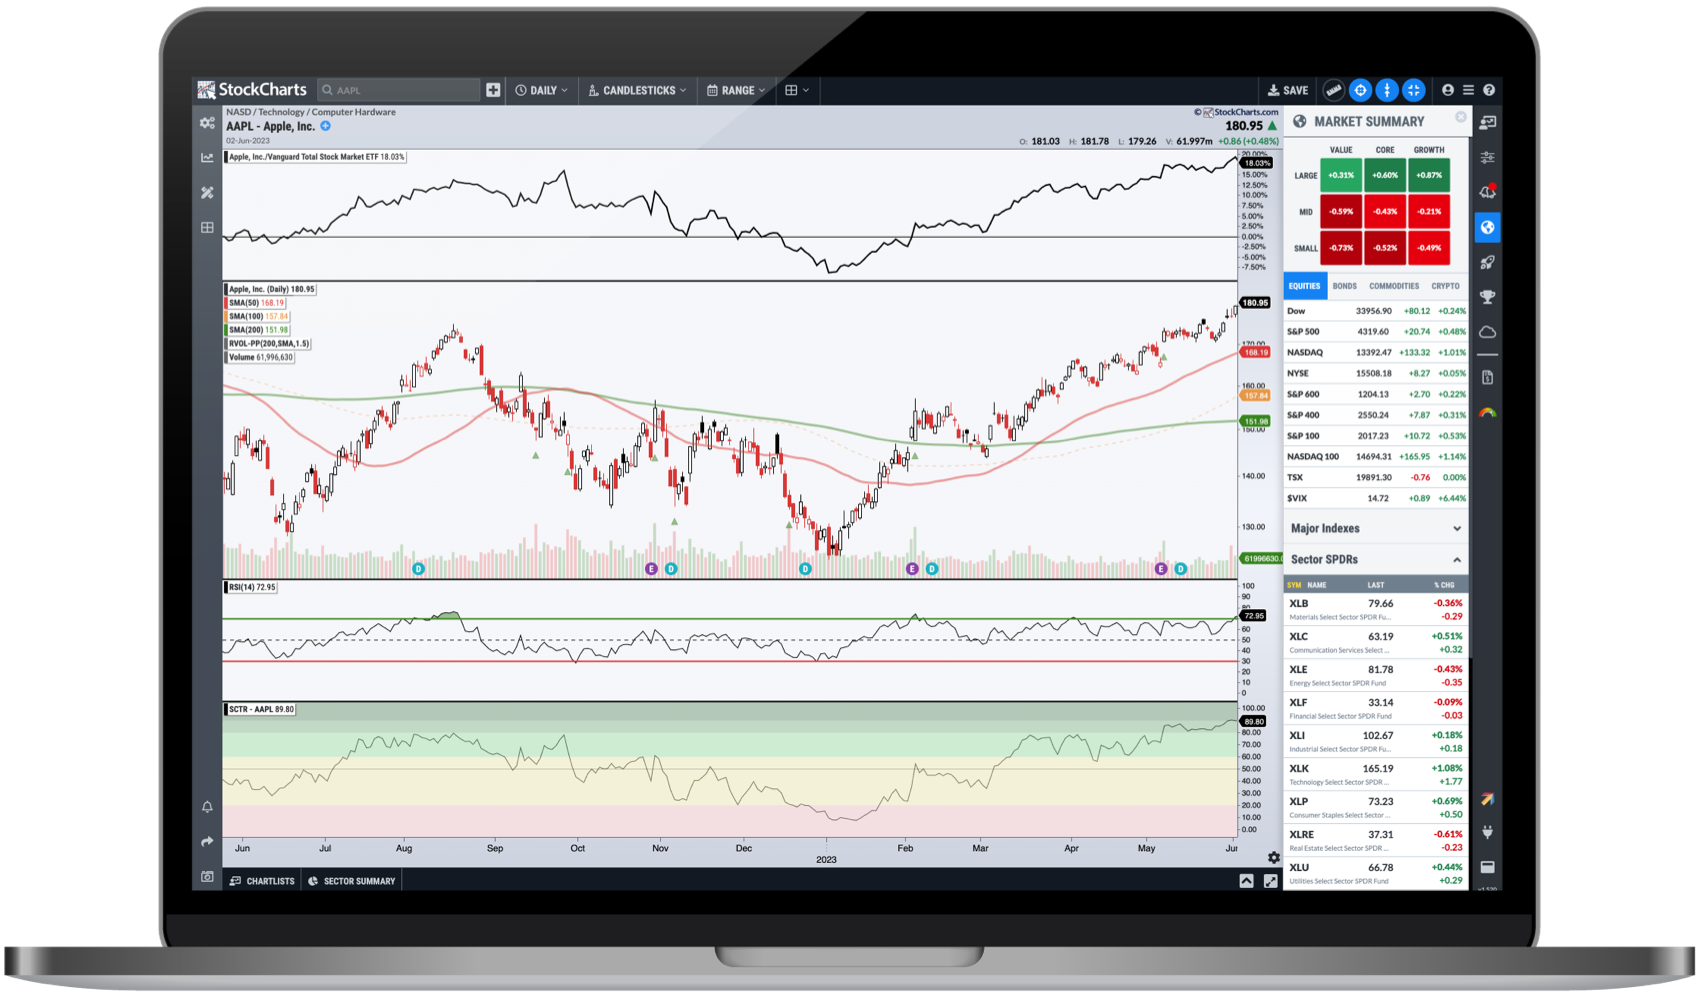 StockCharts.com Advanced Financial & Technical Analysis Tools